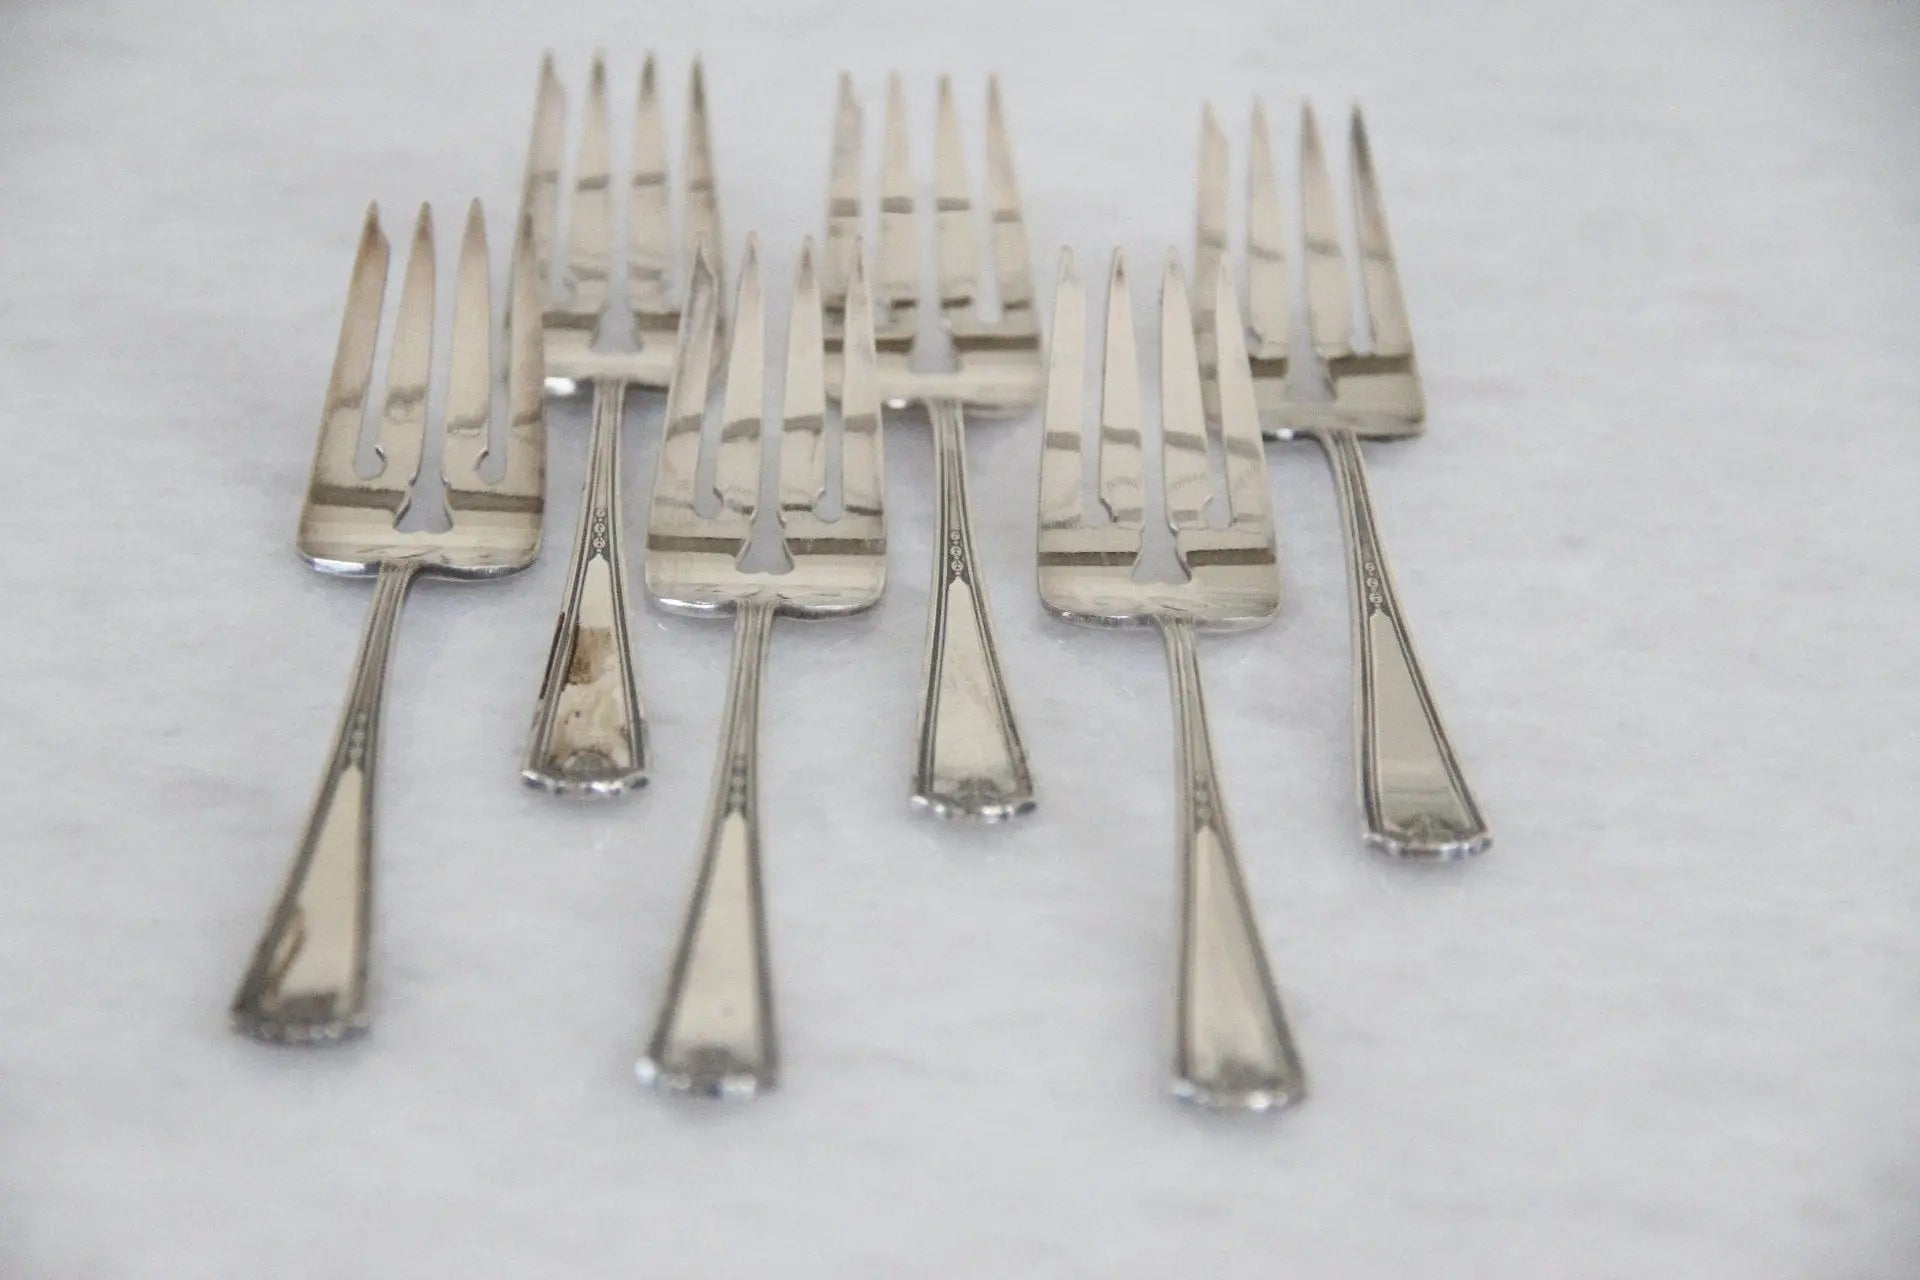 Antique Silver Plate Dessert Fork | Gorham Flatware 6 Pcs.  Debra Hall Lifestyle